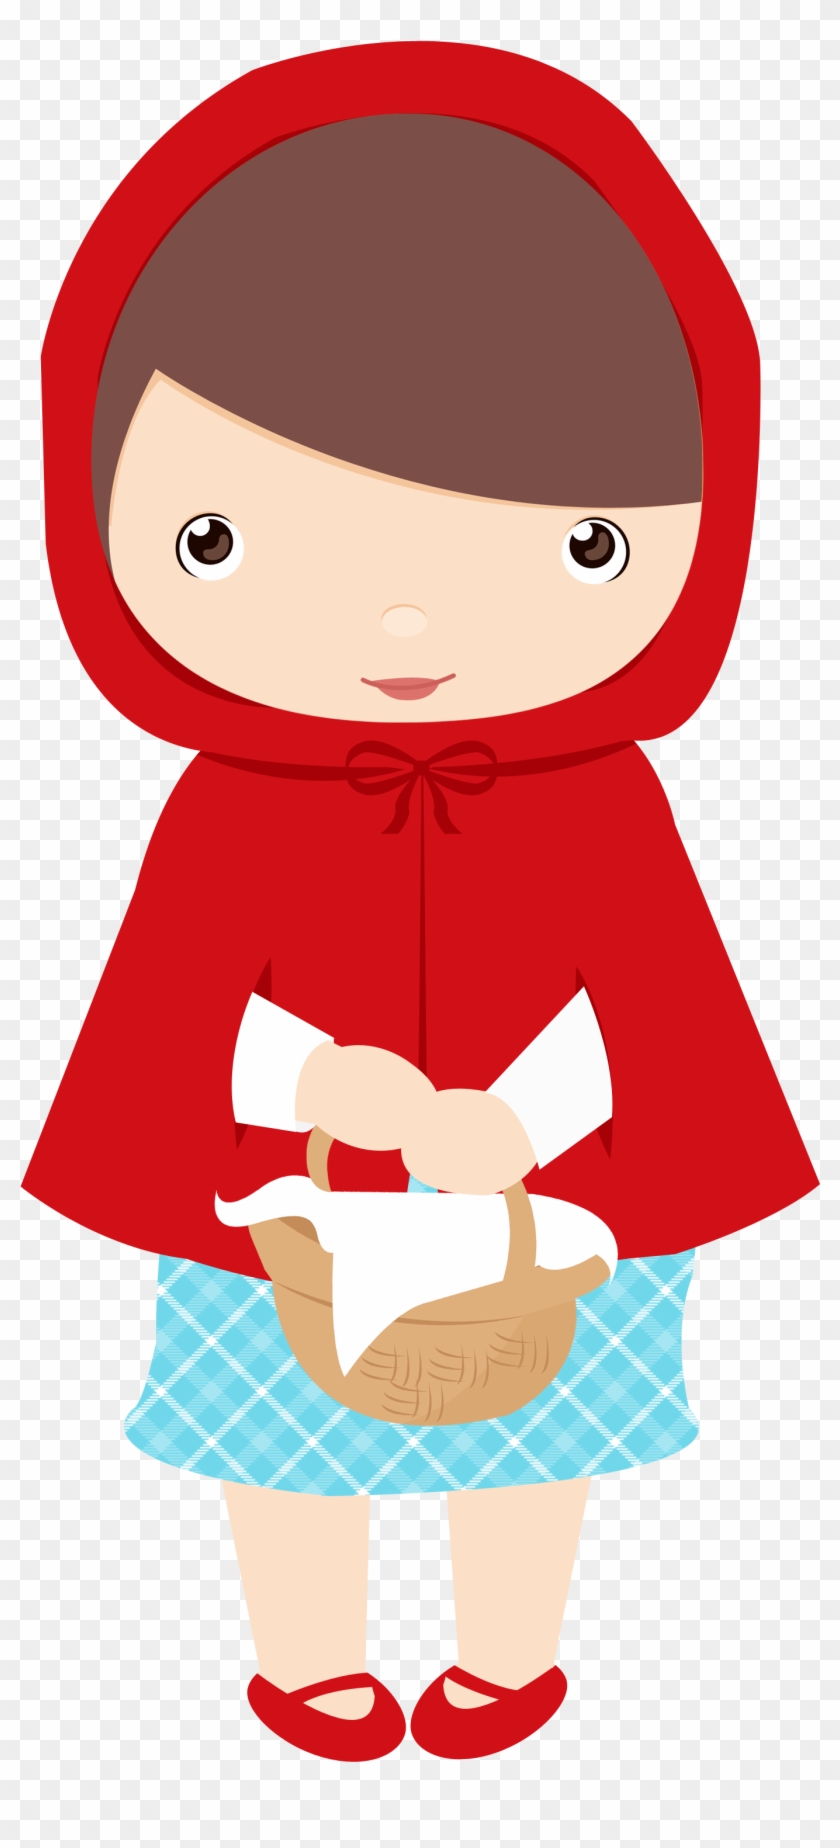 Pin By เพื่อน ตลอดกาล On Cute Clipart ~ Minus - Little Red Riding Hood Clipart Png #170046